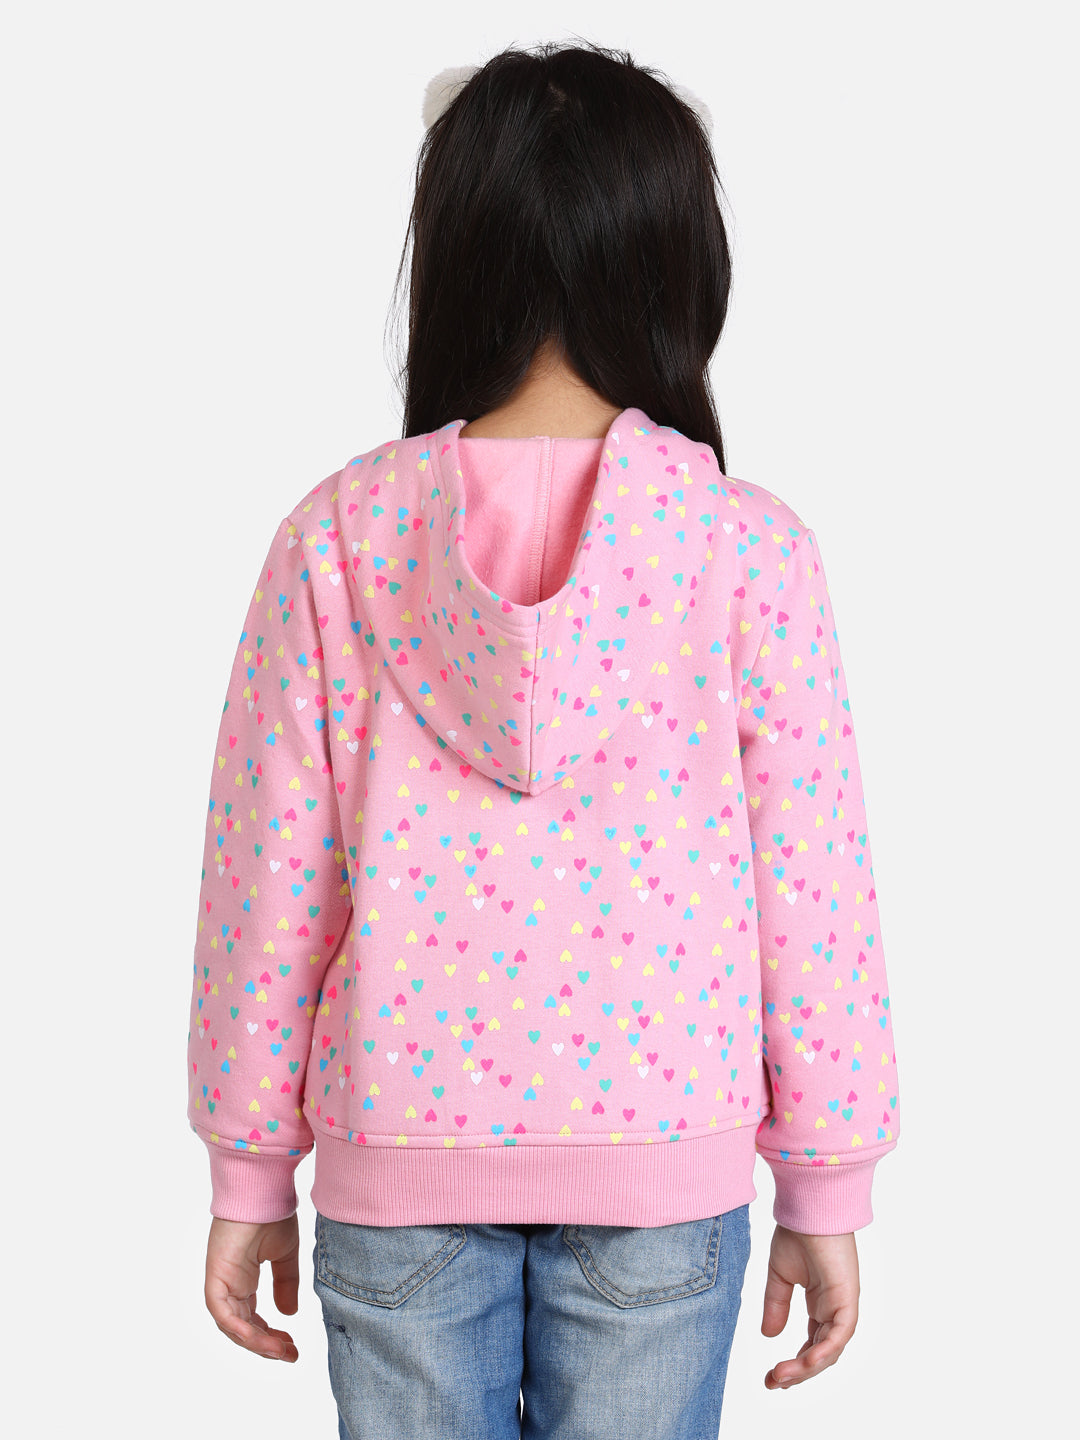 Girls Light Pink  Heart Printed Jacket with Hoodie